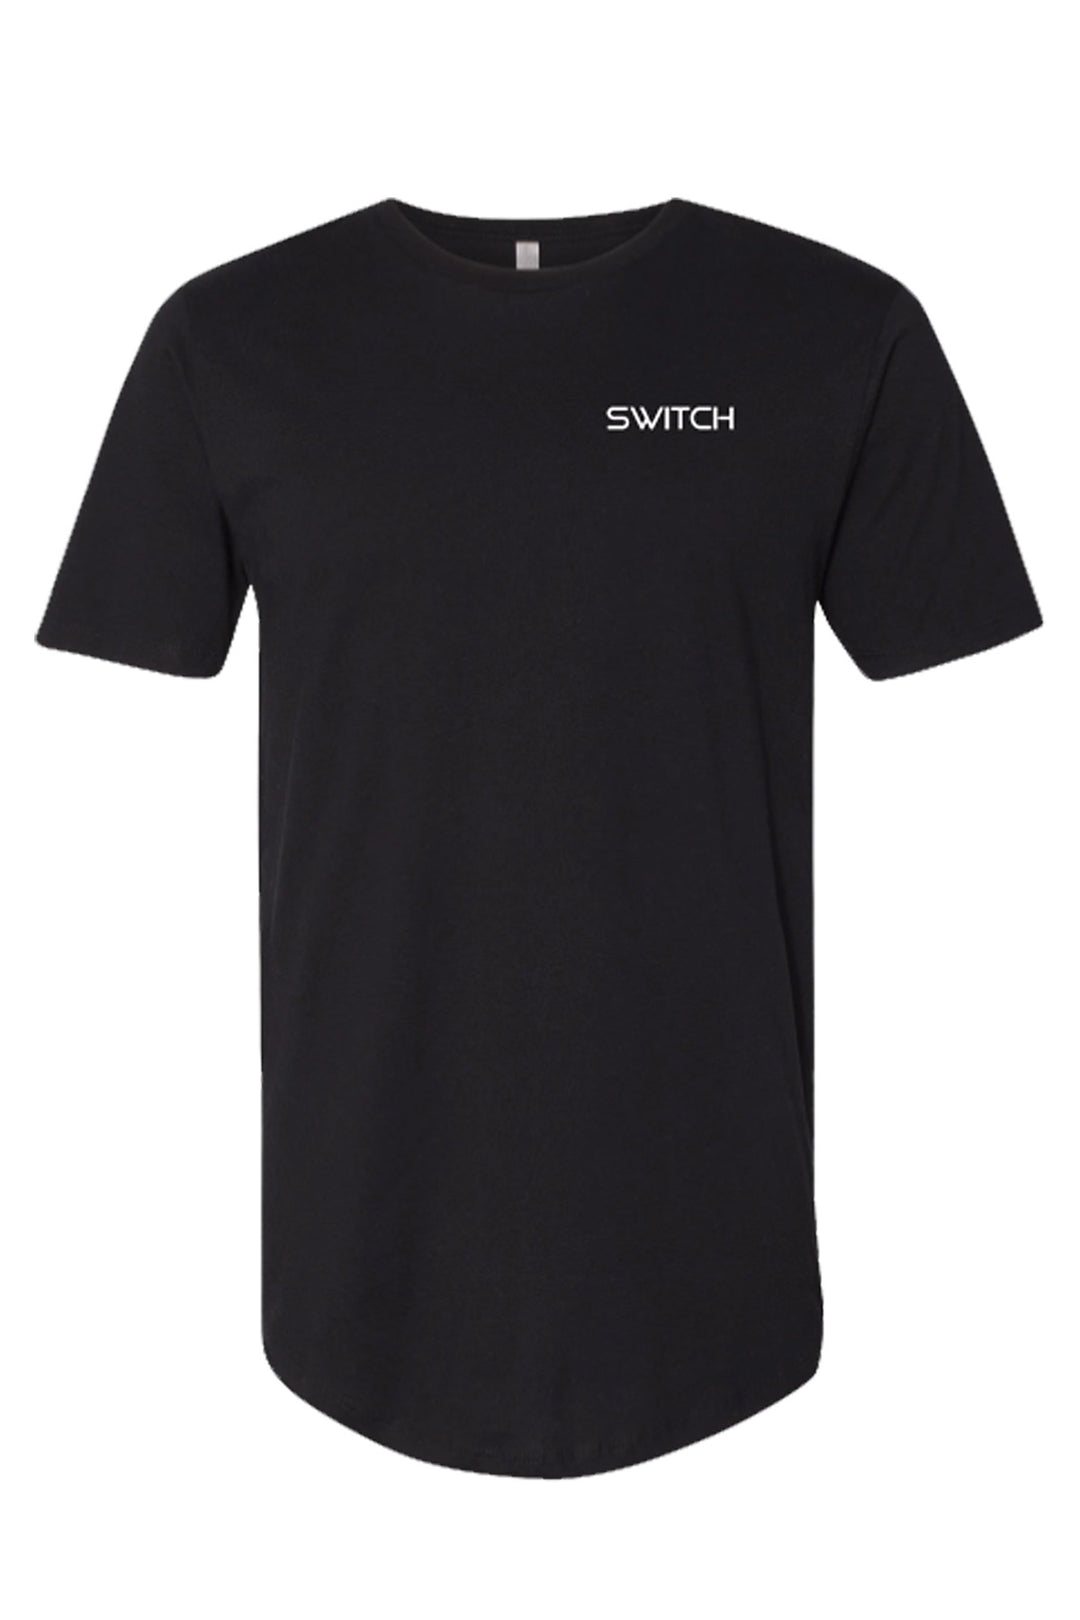 Unisex Cotton Long Body T-Shirt - Worldmark